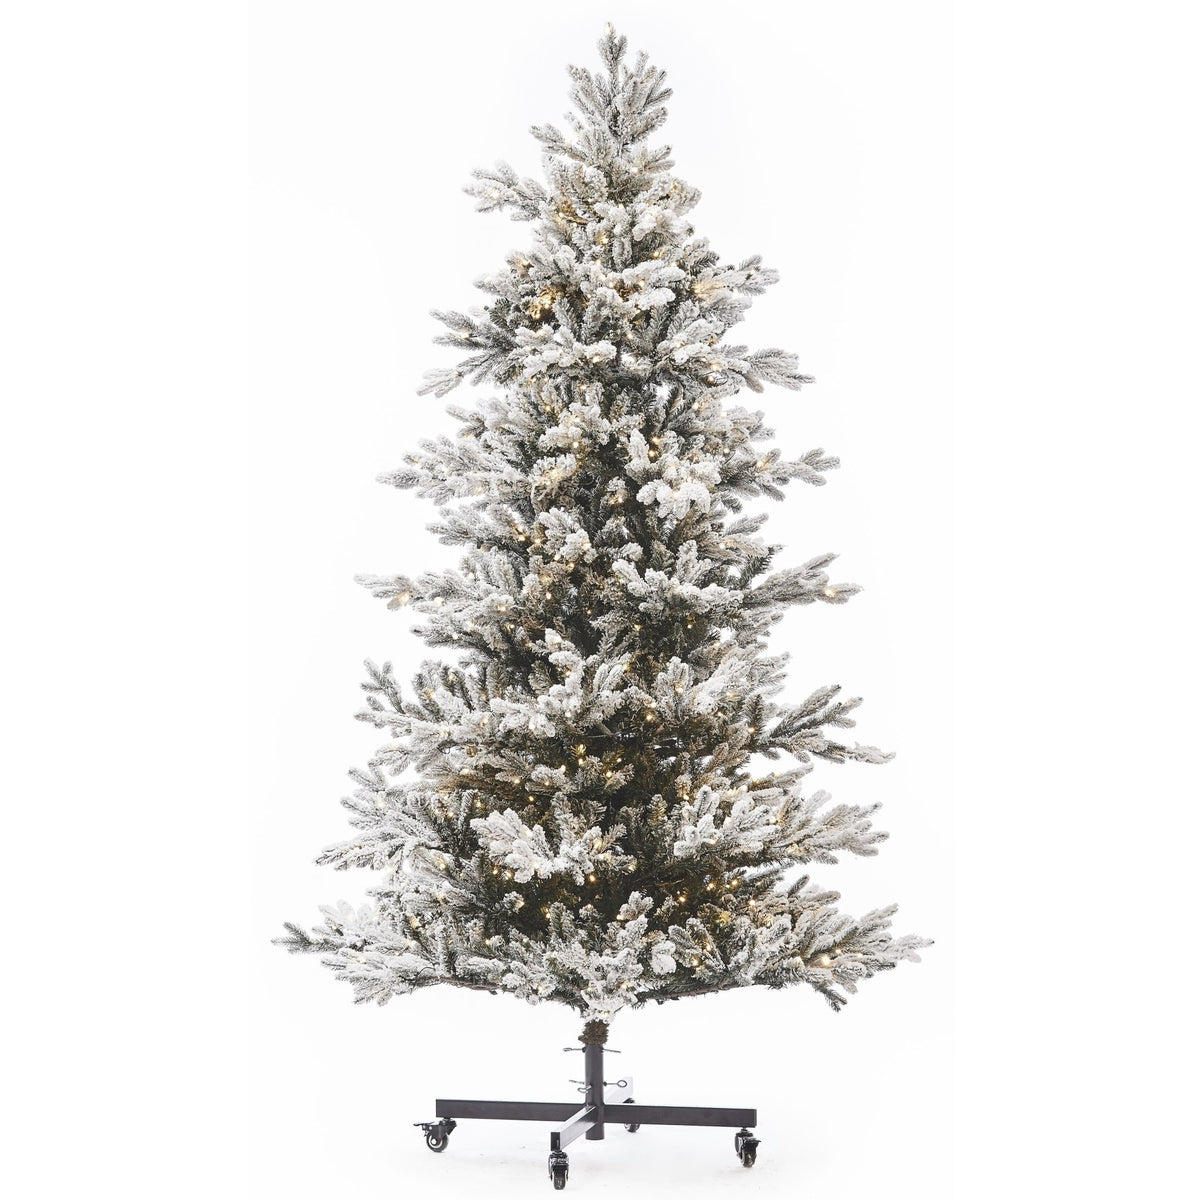 12ft Snowy Nordic Fir Tree w/ WW LED Lights - Holiday Warehouse